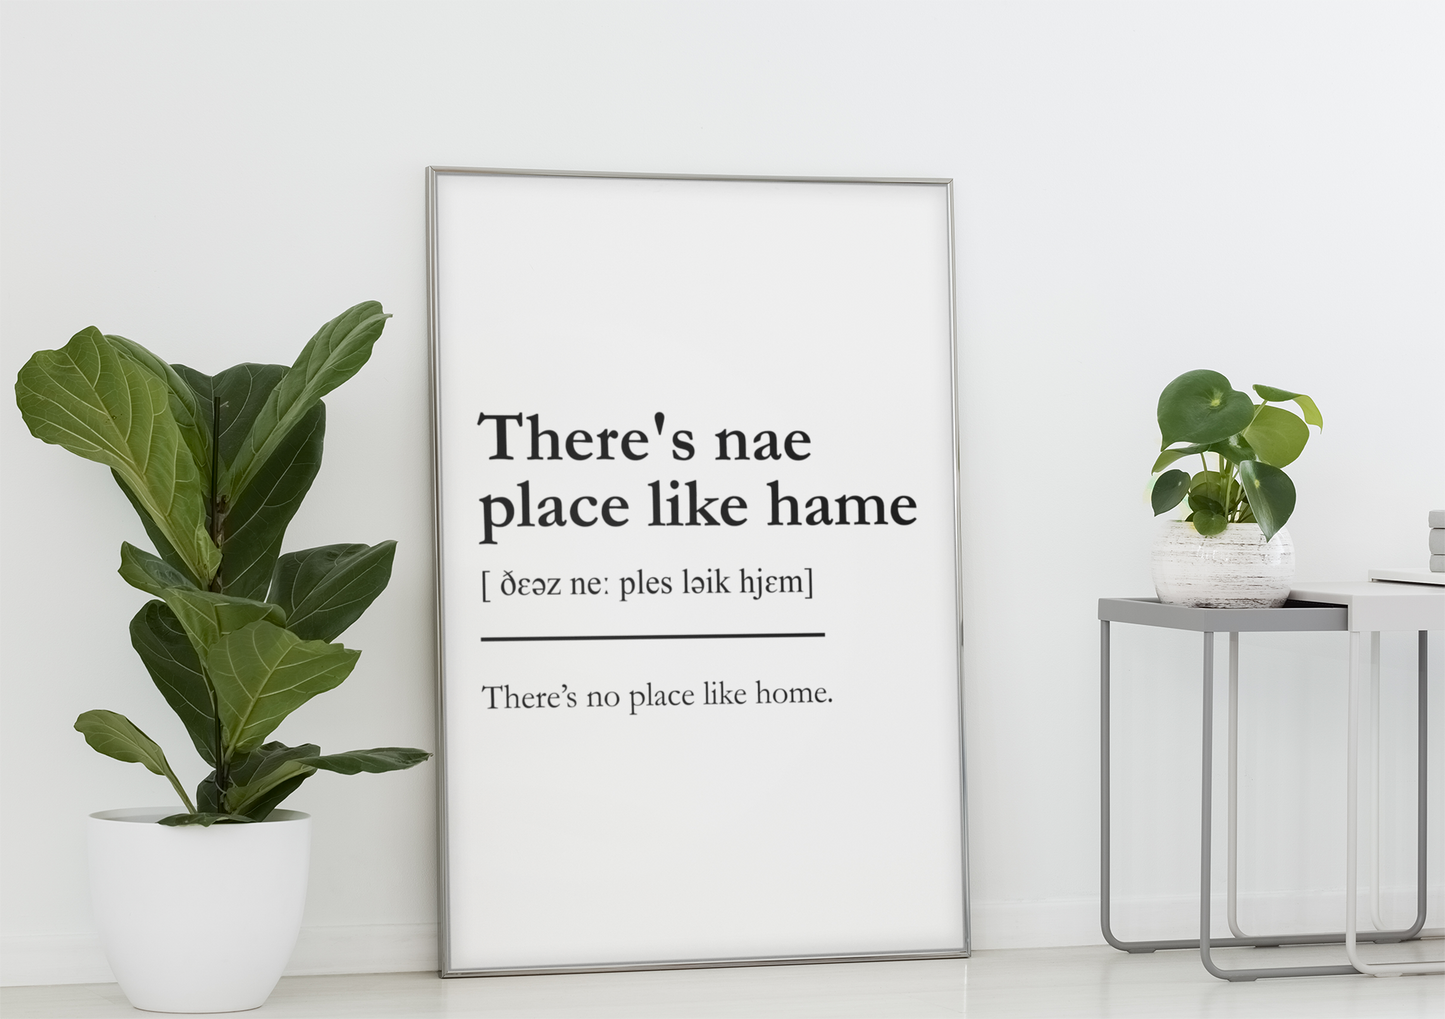 "There's nae place like hame" - Scottish Slang